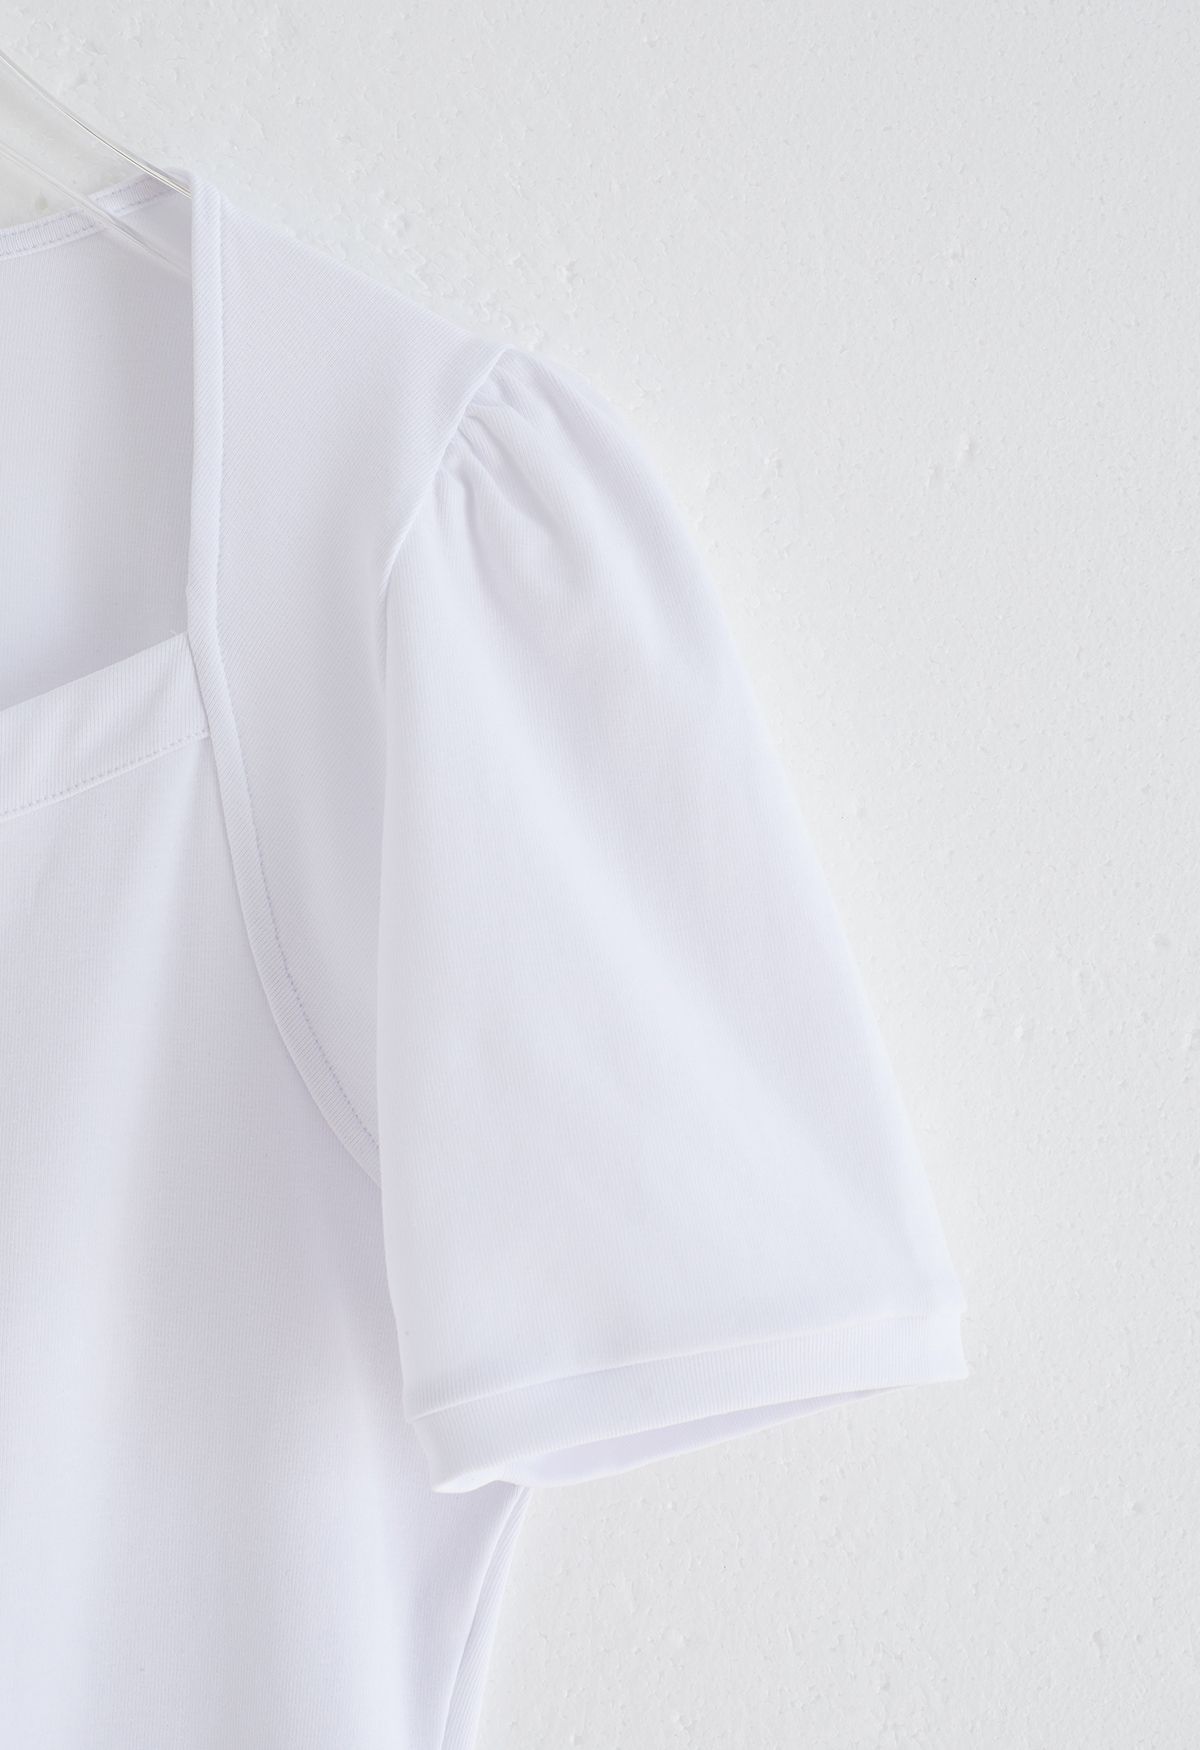 Square Neckline Puff Shoulder T-Shirt in White